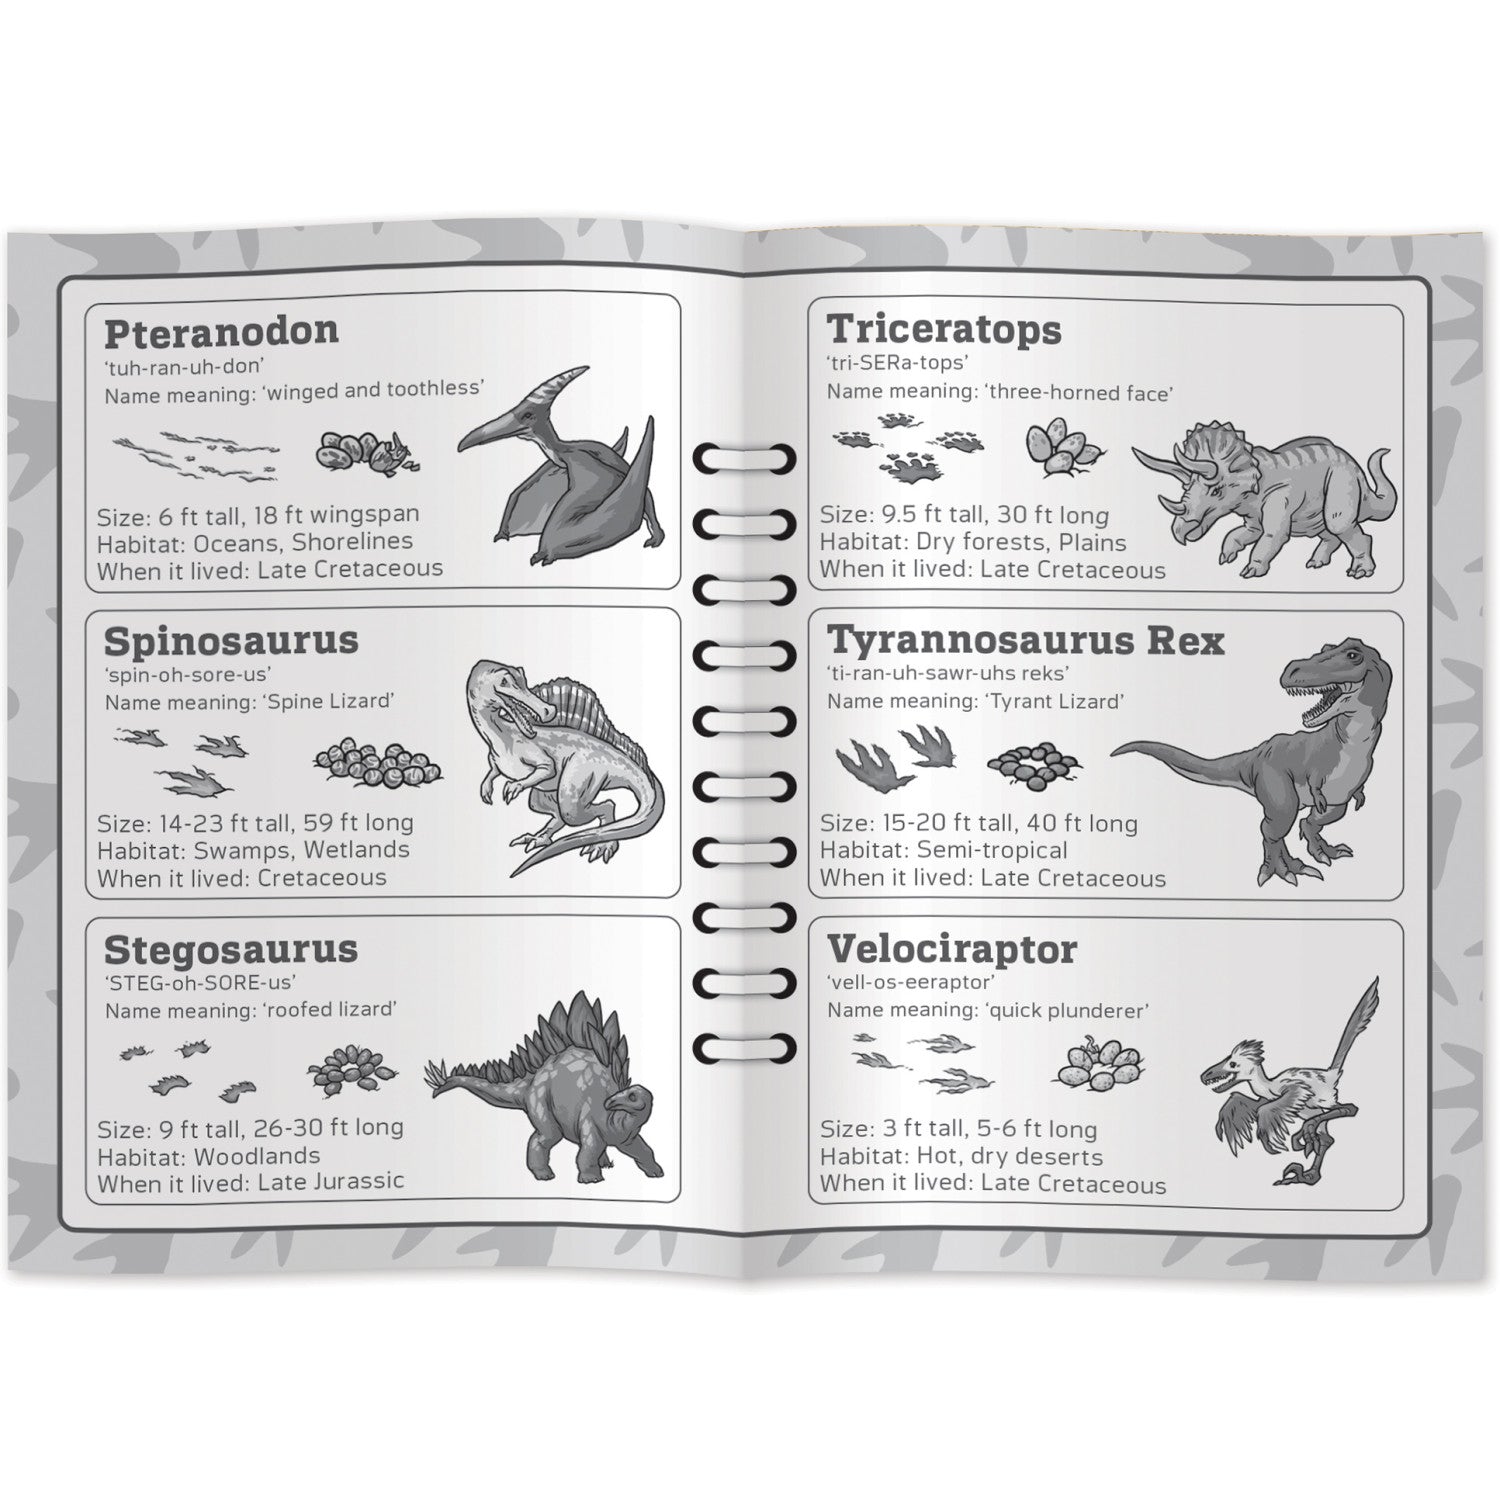 Dinosaur World Dino Tracks Card Game